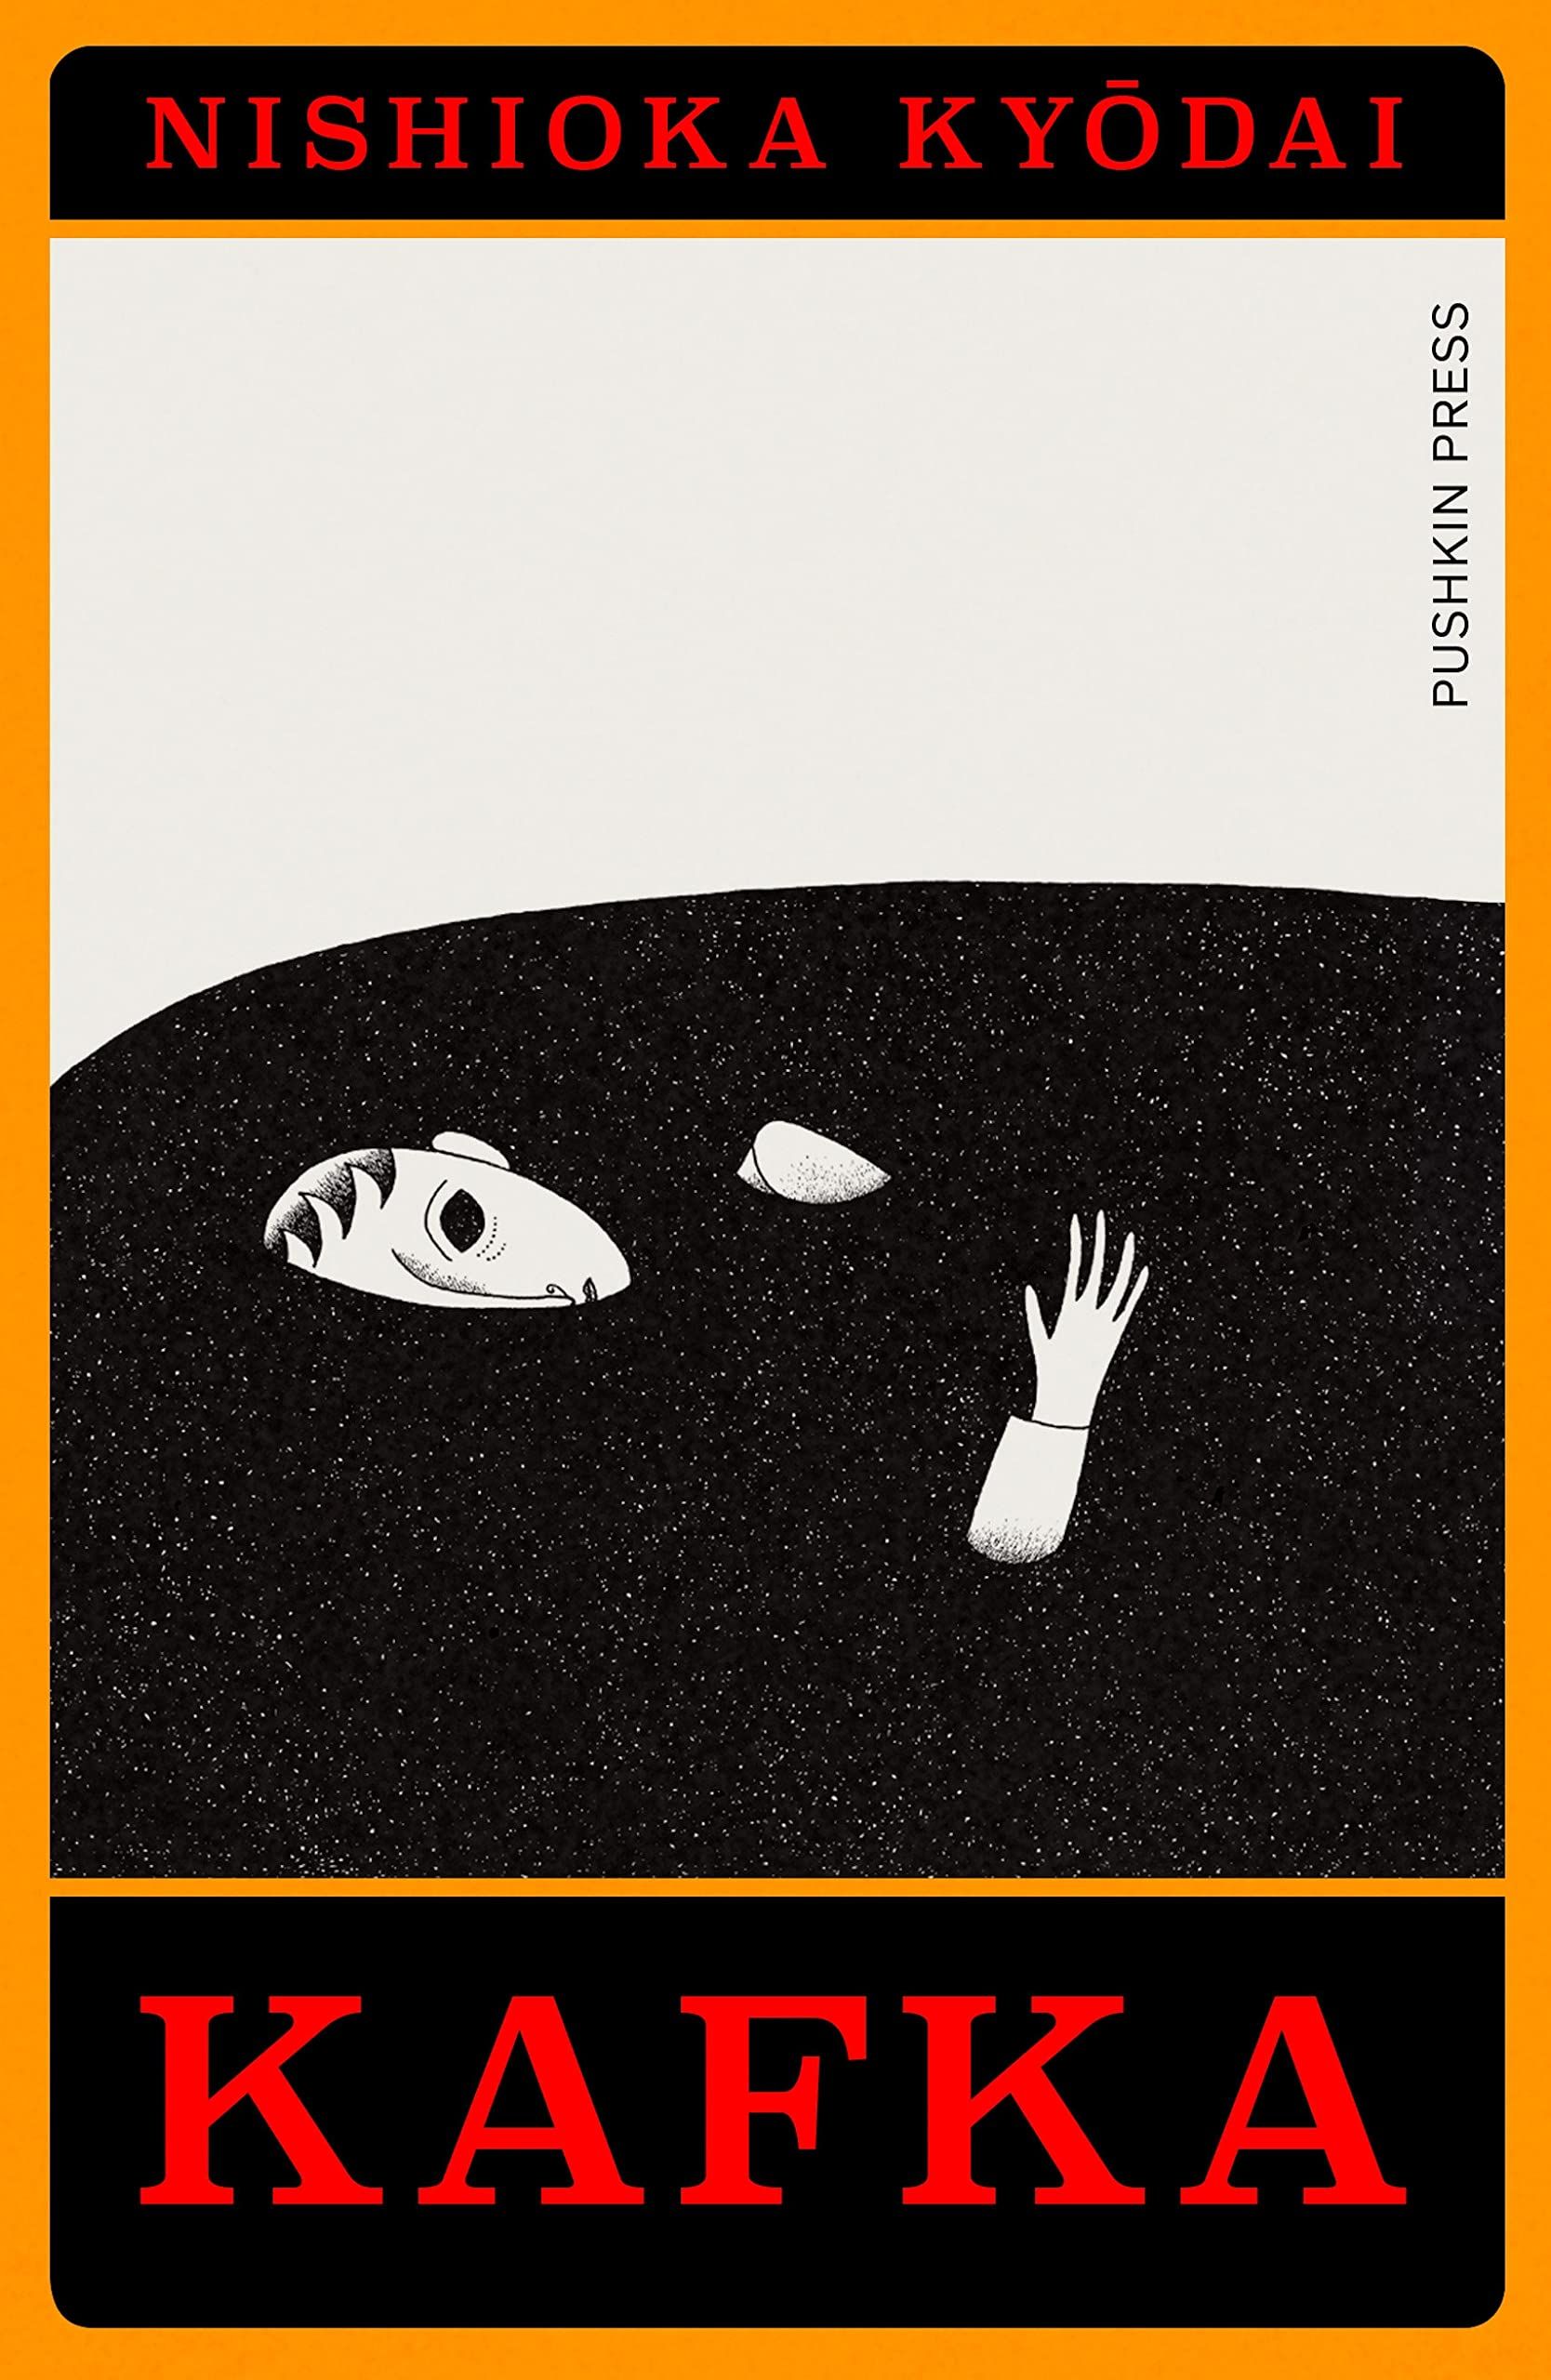 Kafka: A Graphic Novel Adaptation by Nishioka Kyodai cover